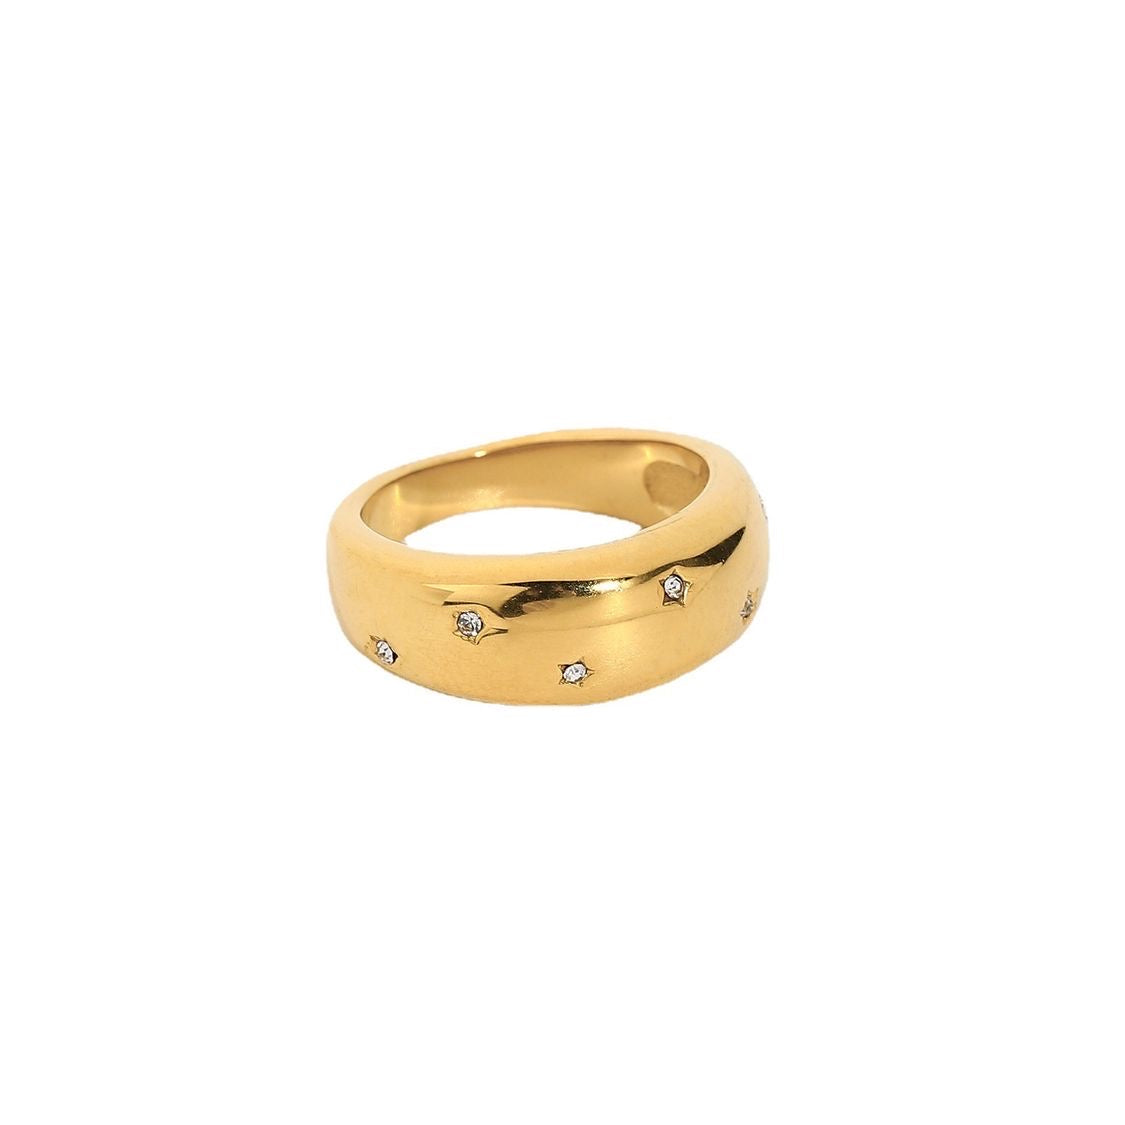 Ring "Fullmoon" mit 18k-Vergoldung und Zirkonia